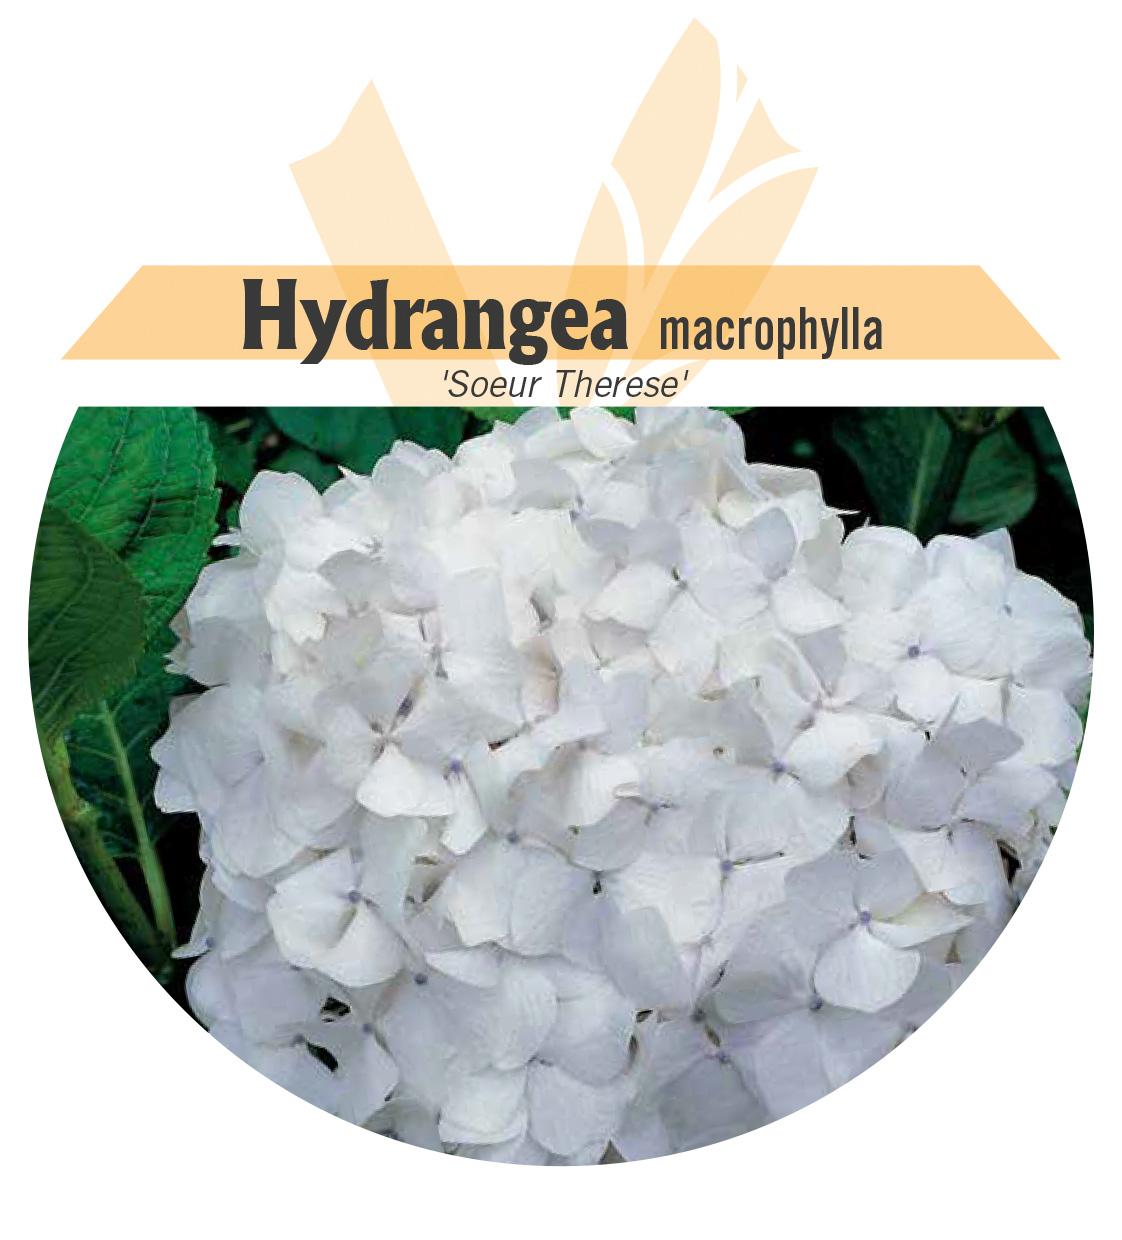 Hydrangea macrophylla